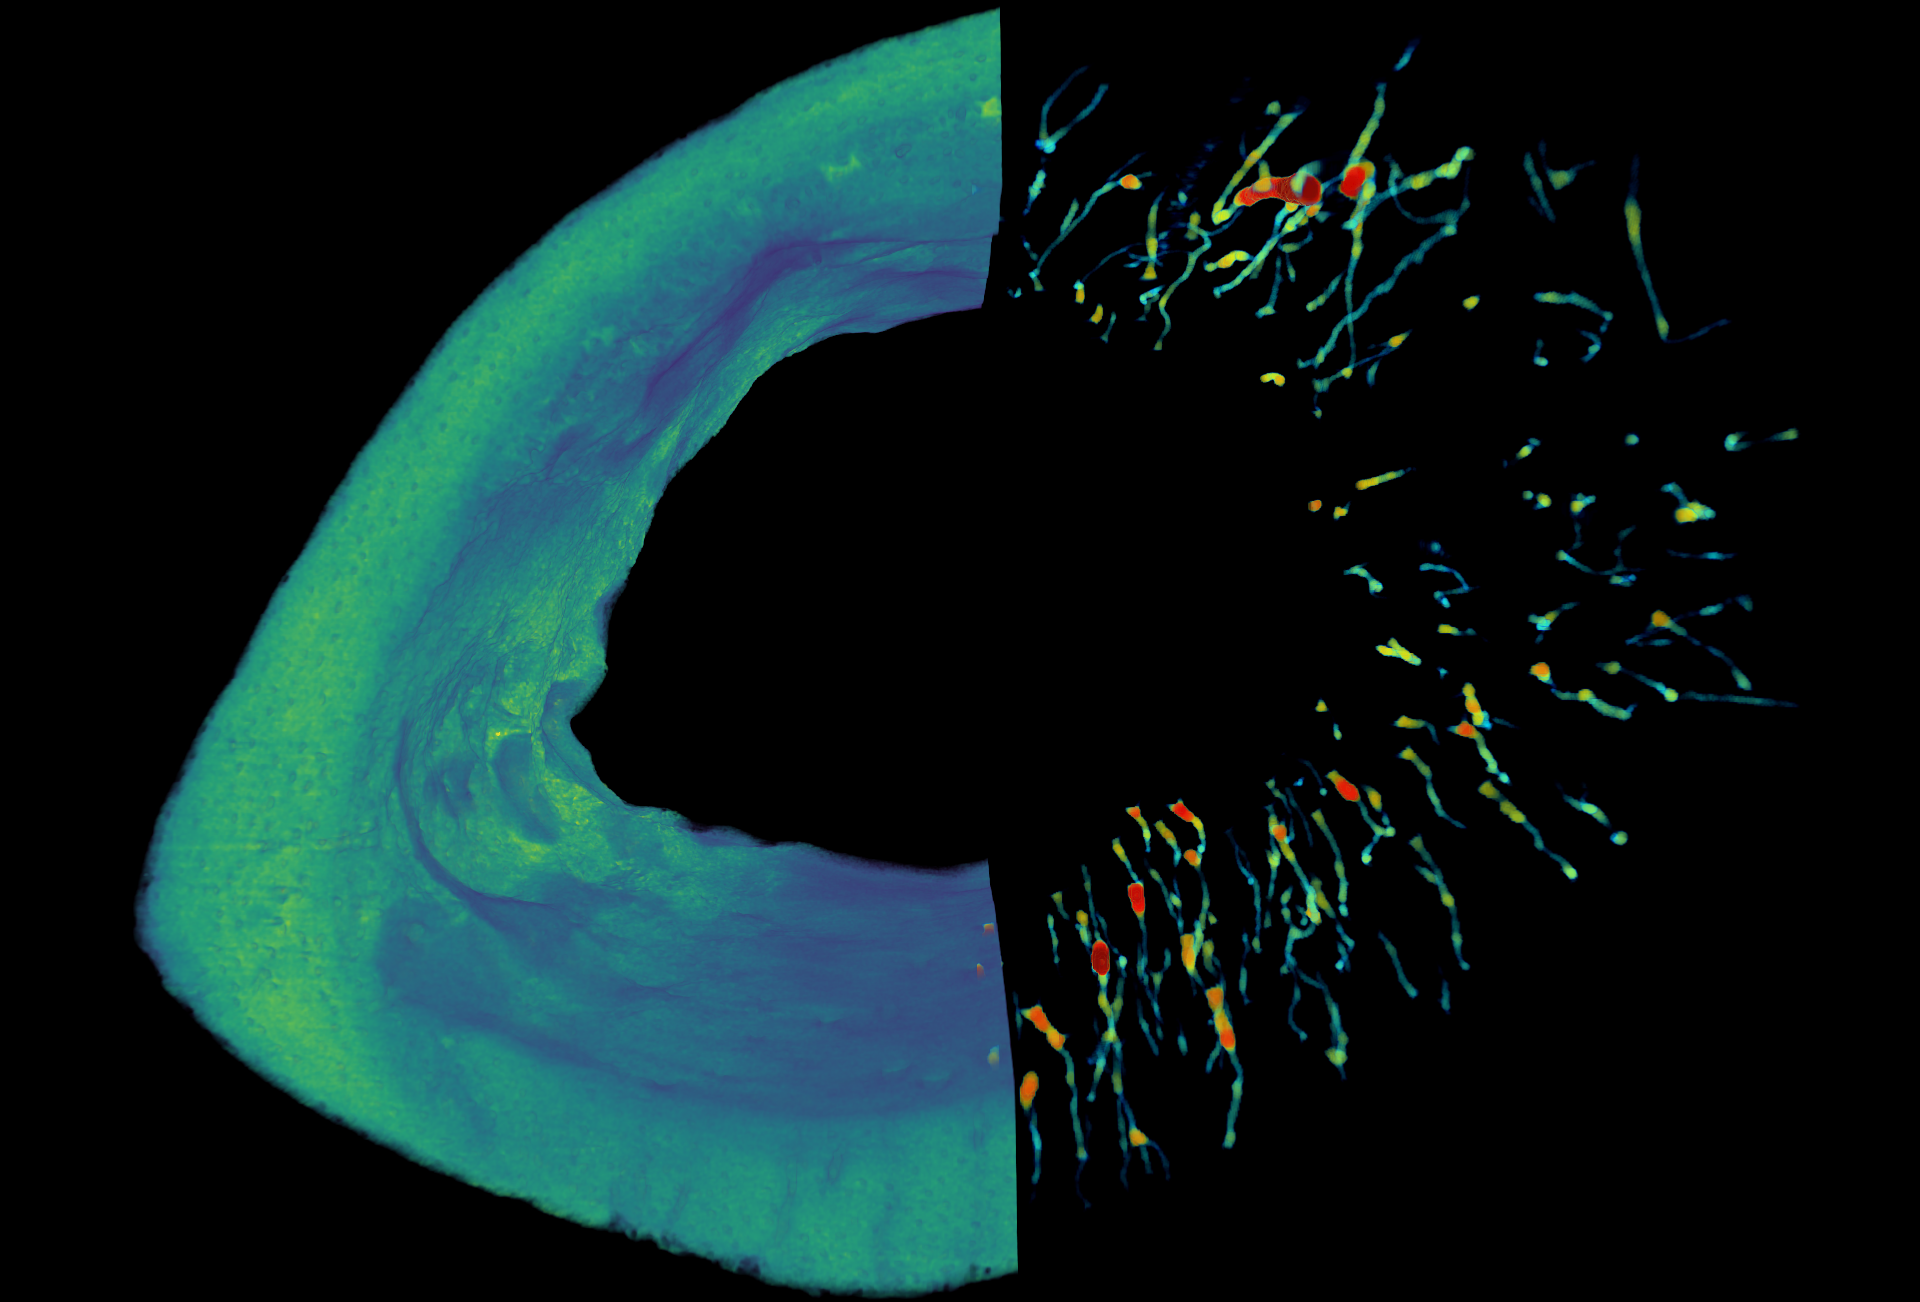 Quantitative Bone Imaging using Synchrotron Micro-computed Tomography